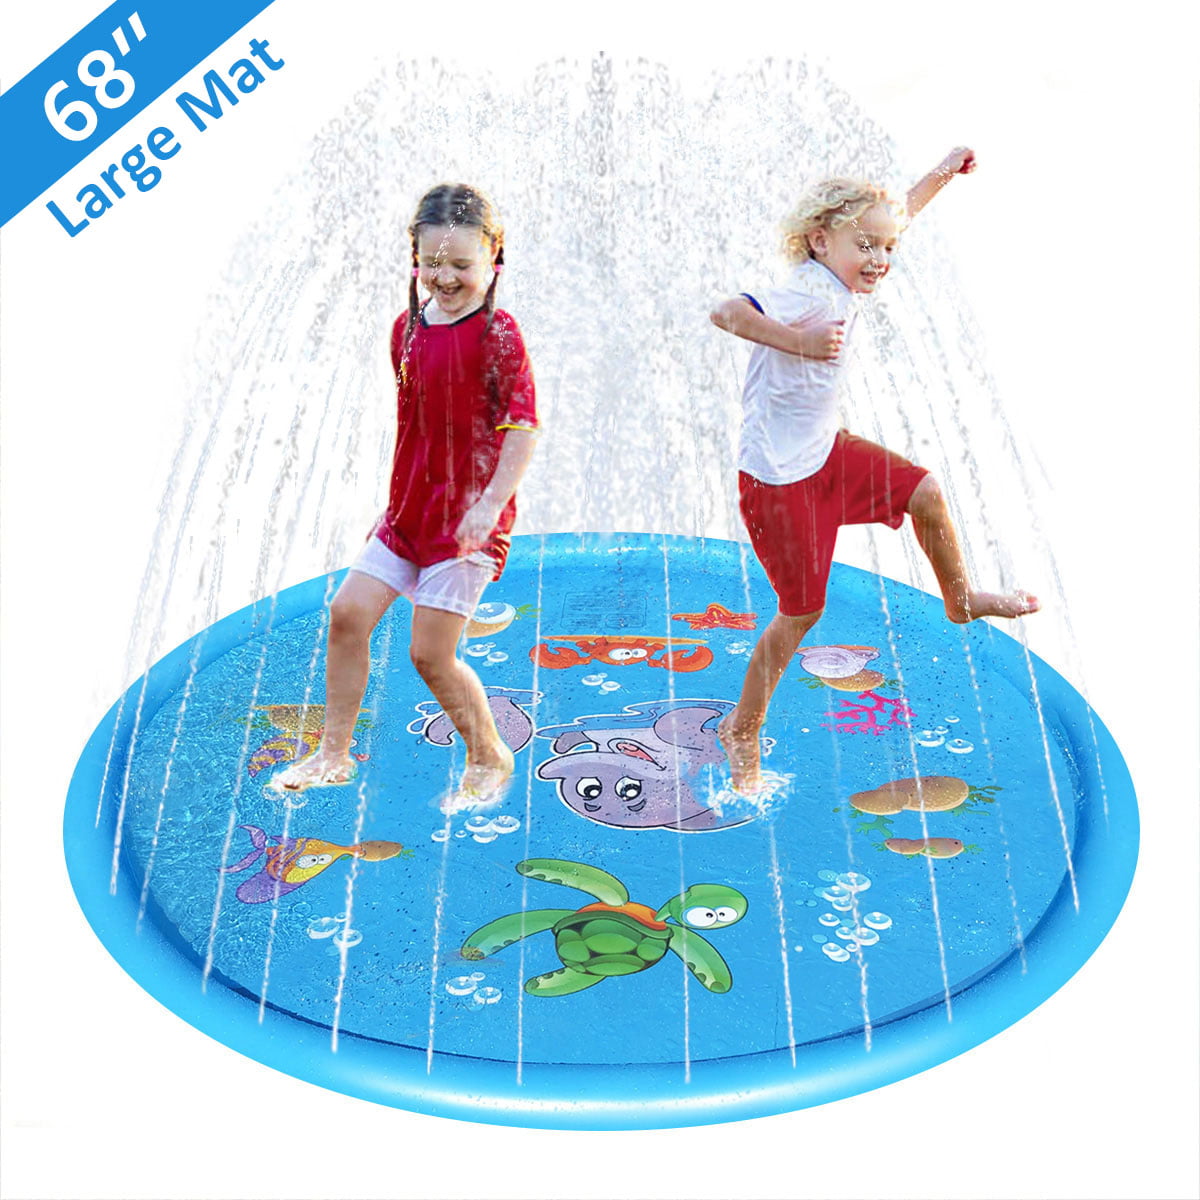 Child Yeah-hhi Summer Outdoor Water Toys Splash Pad Sprinkler Mat Pool Kids Splash Play Mat Fun Games Learning Party for Toddlers